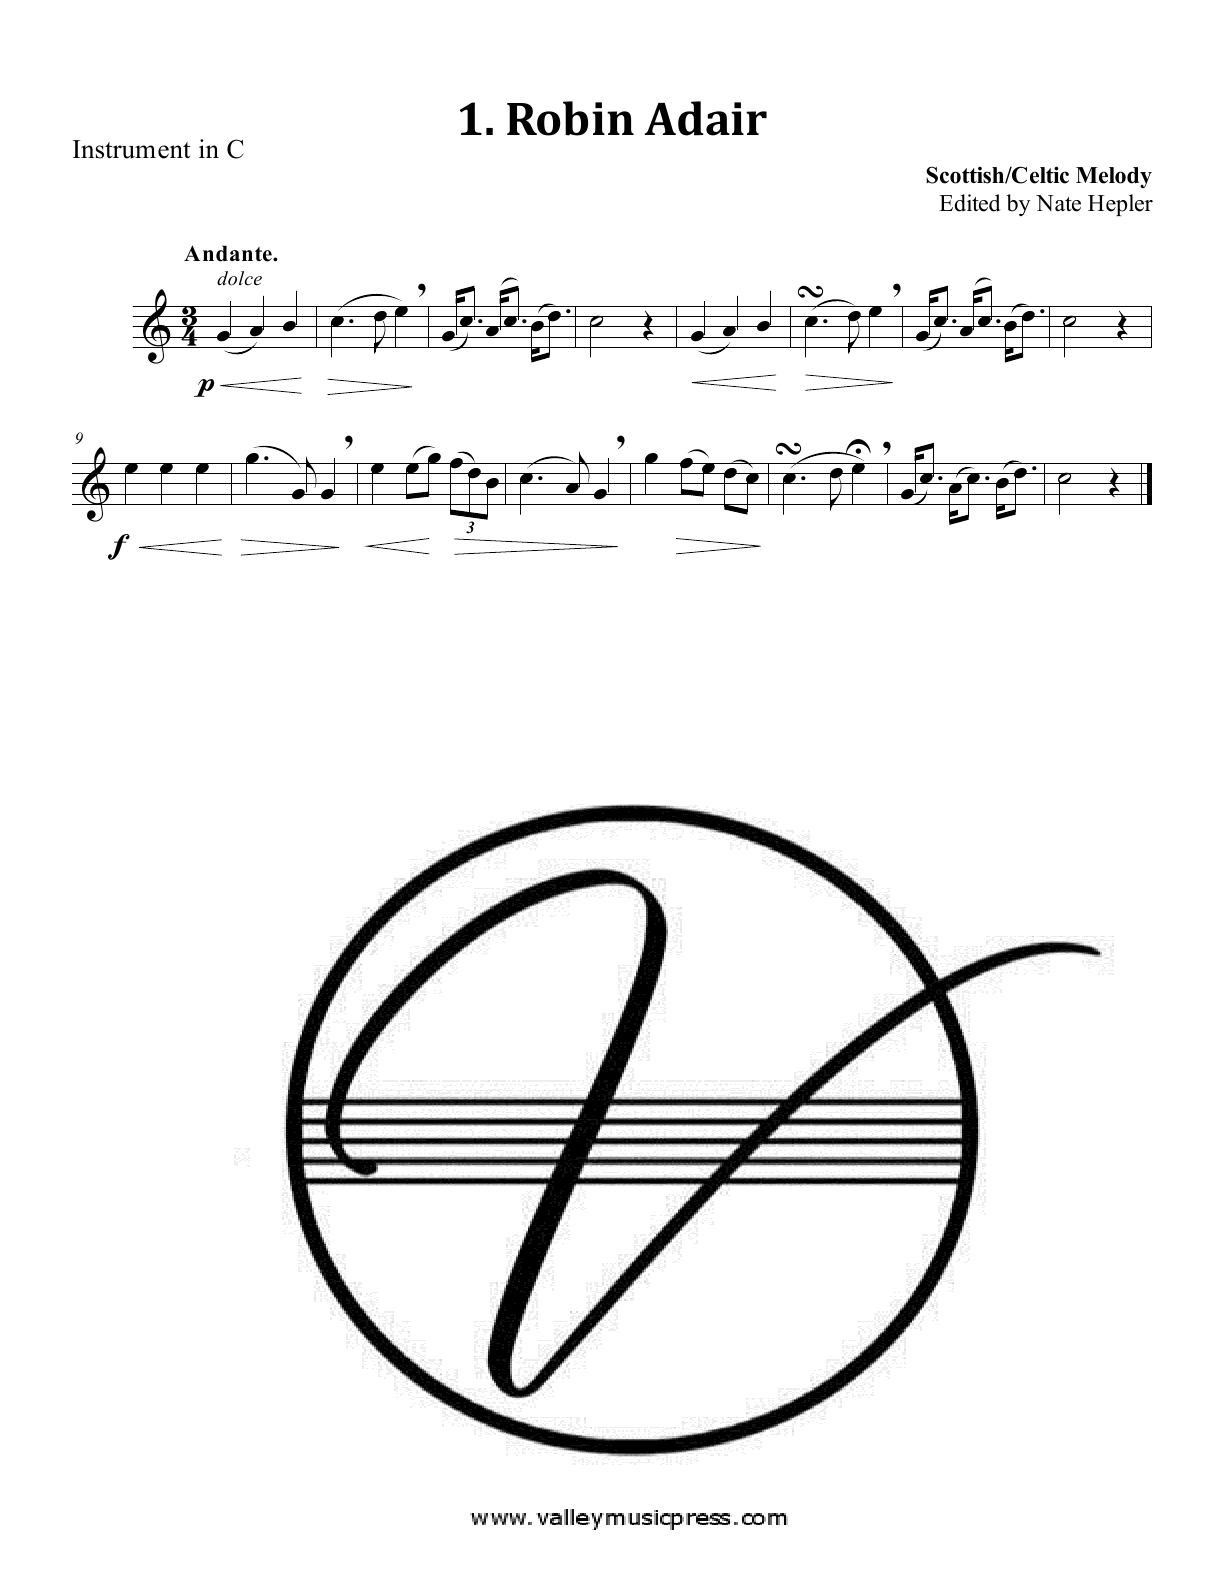 Arban Art of Phrasing Piano Accompaniment Vol. 3 No. 51-75 (C)